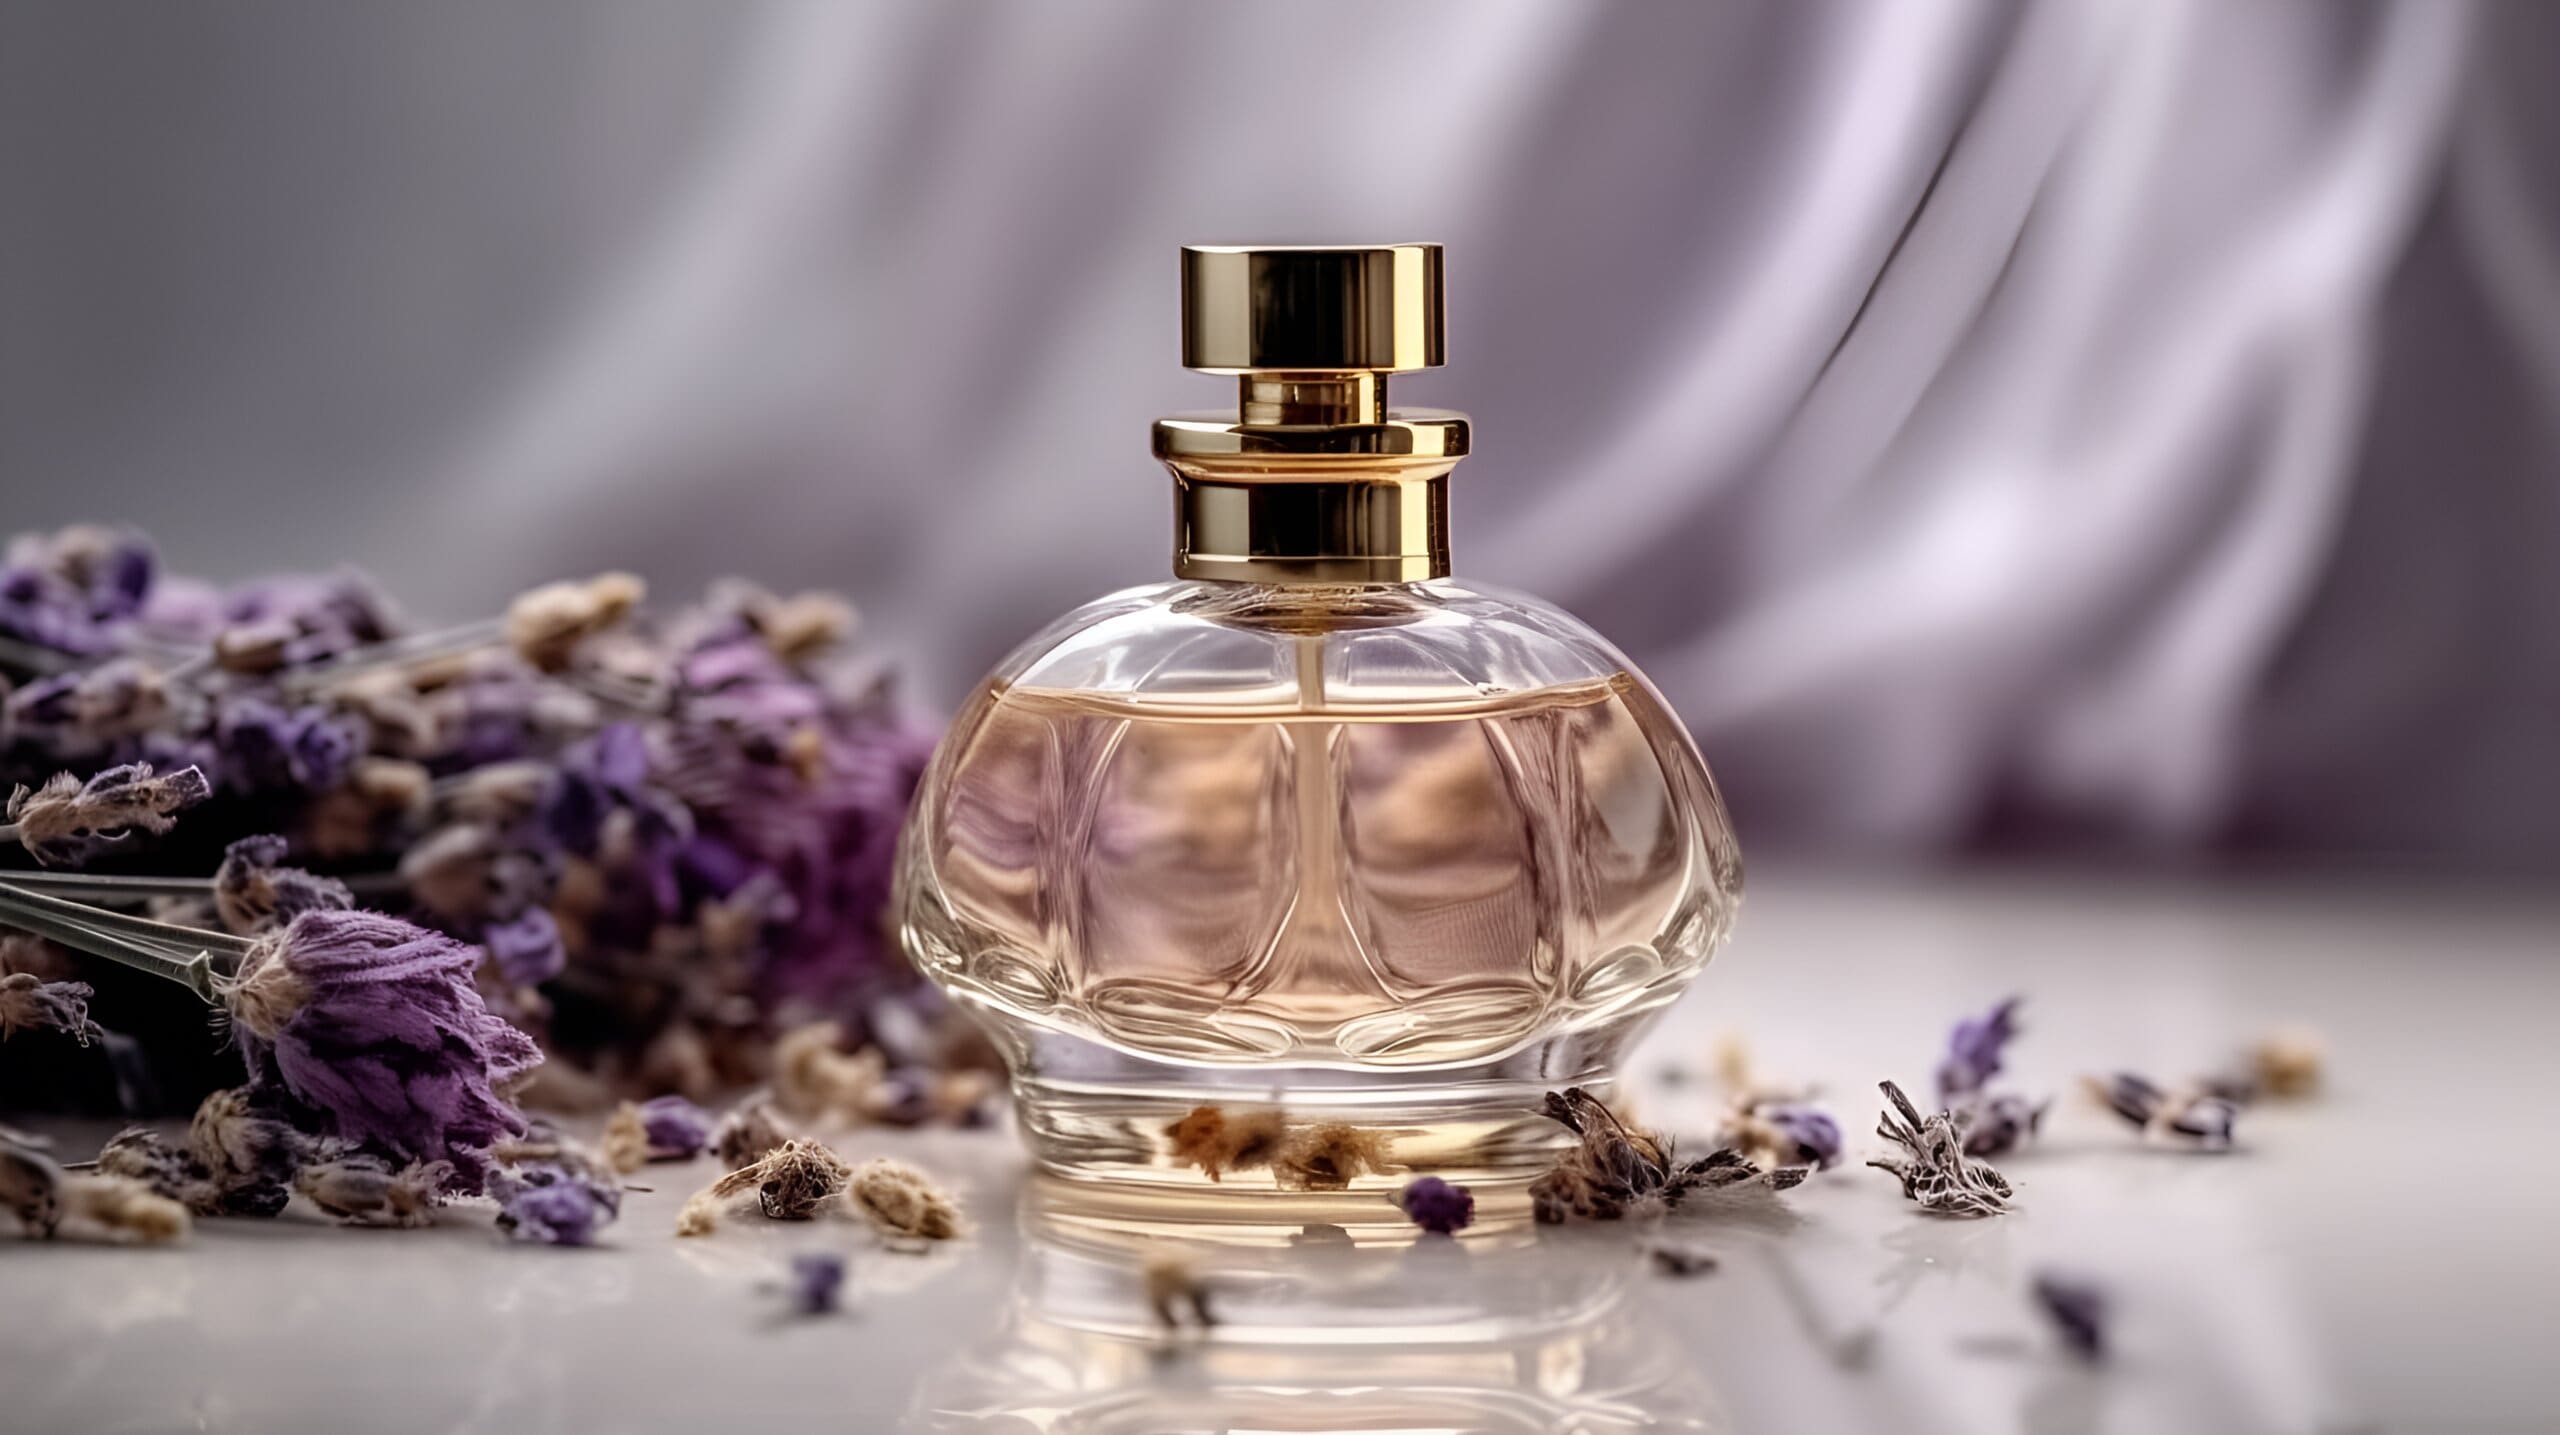 Glass perfume bottle with lavender petals surrounding it.